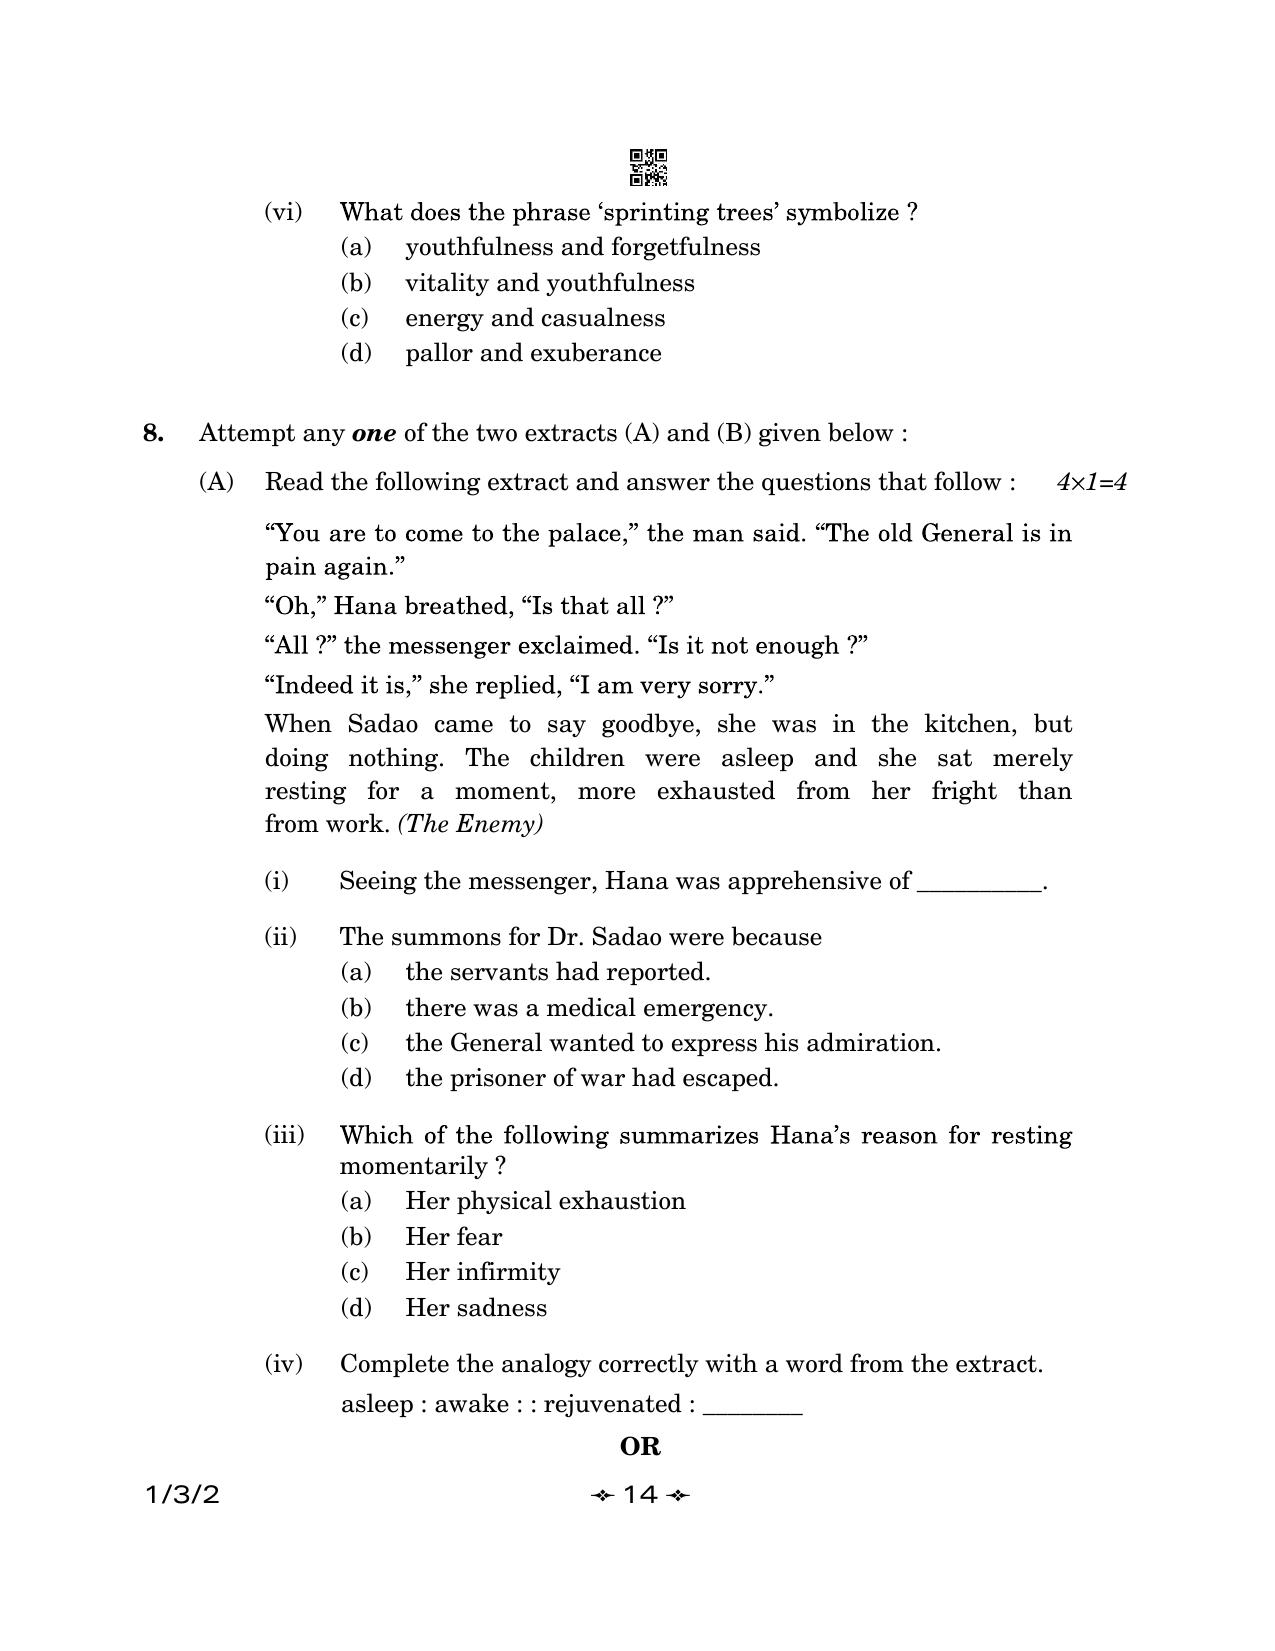 CBSE Class 12 1-3-2 English Core 2023 Question Paper - Page 14